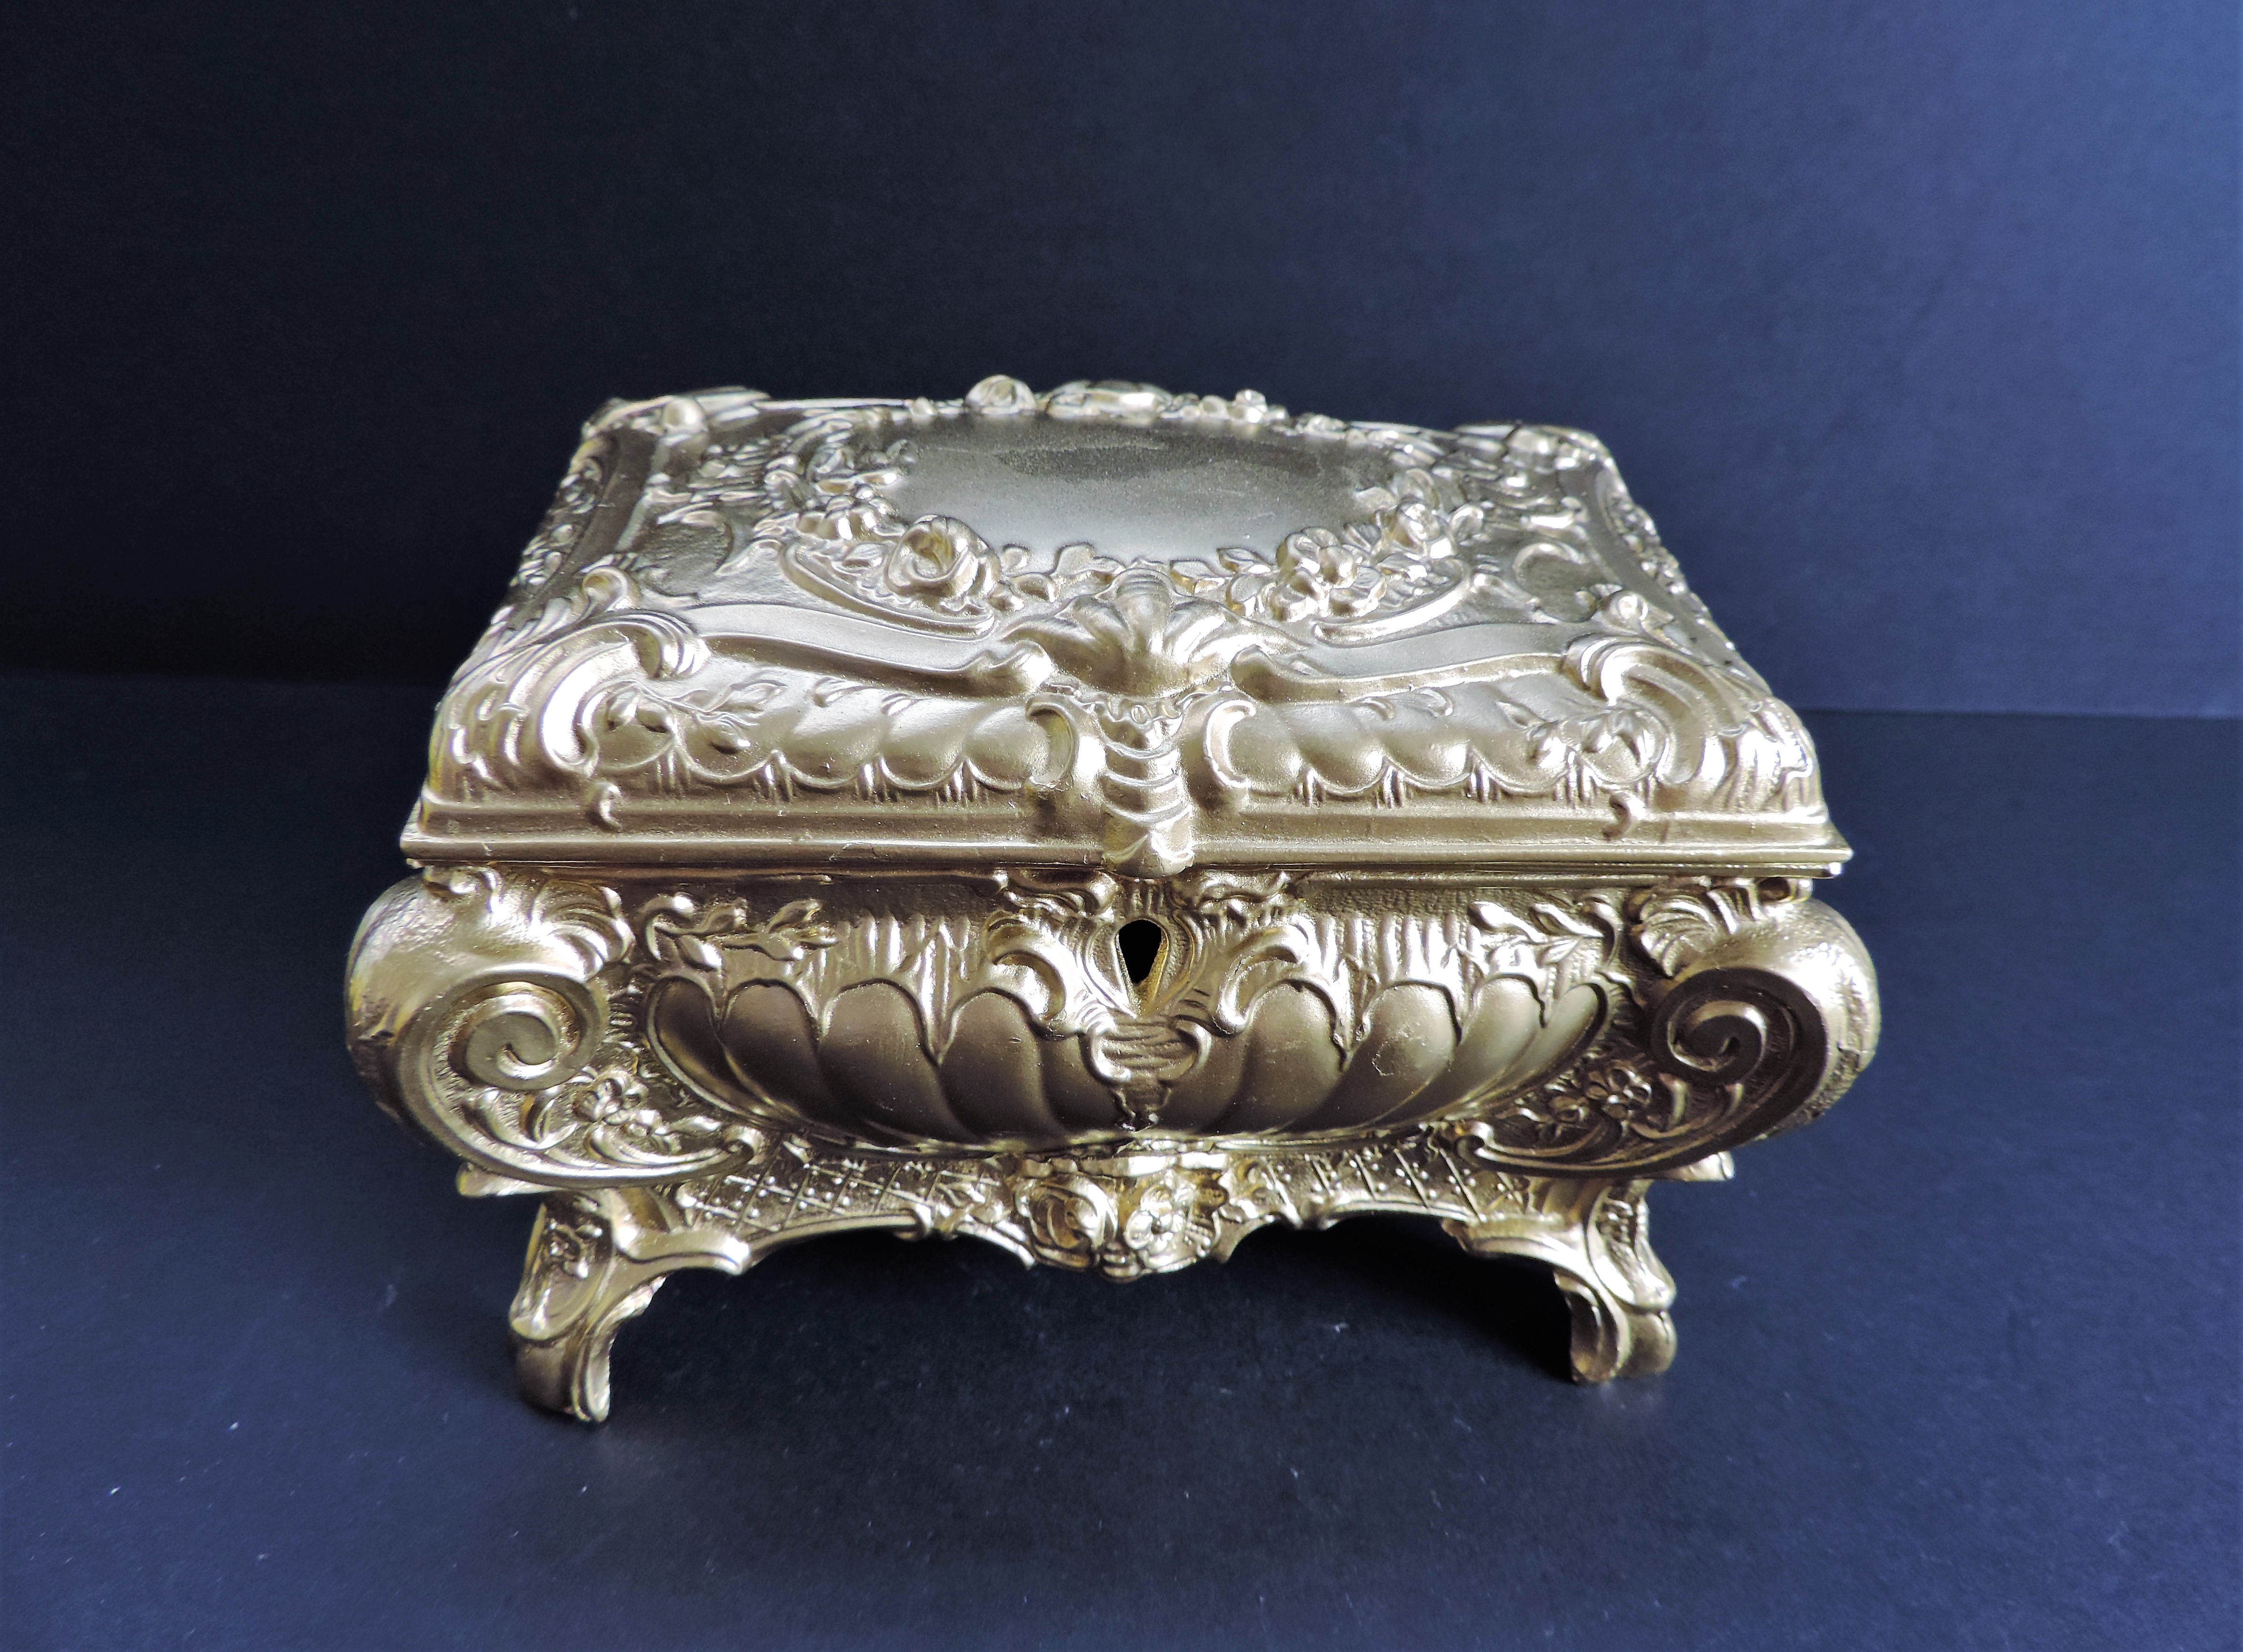 Antique Gold Metal Jewellery Casket - Image 2 of 4